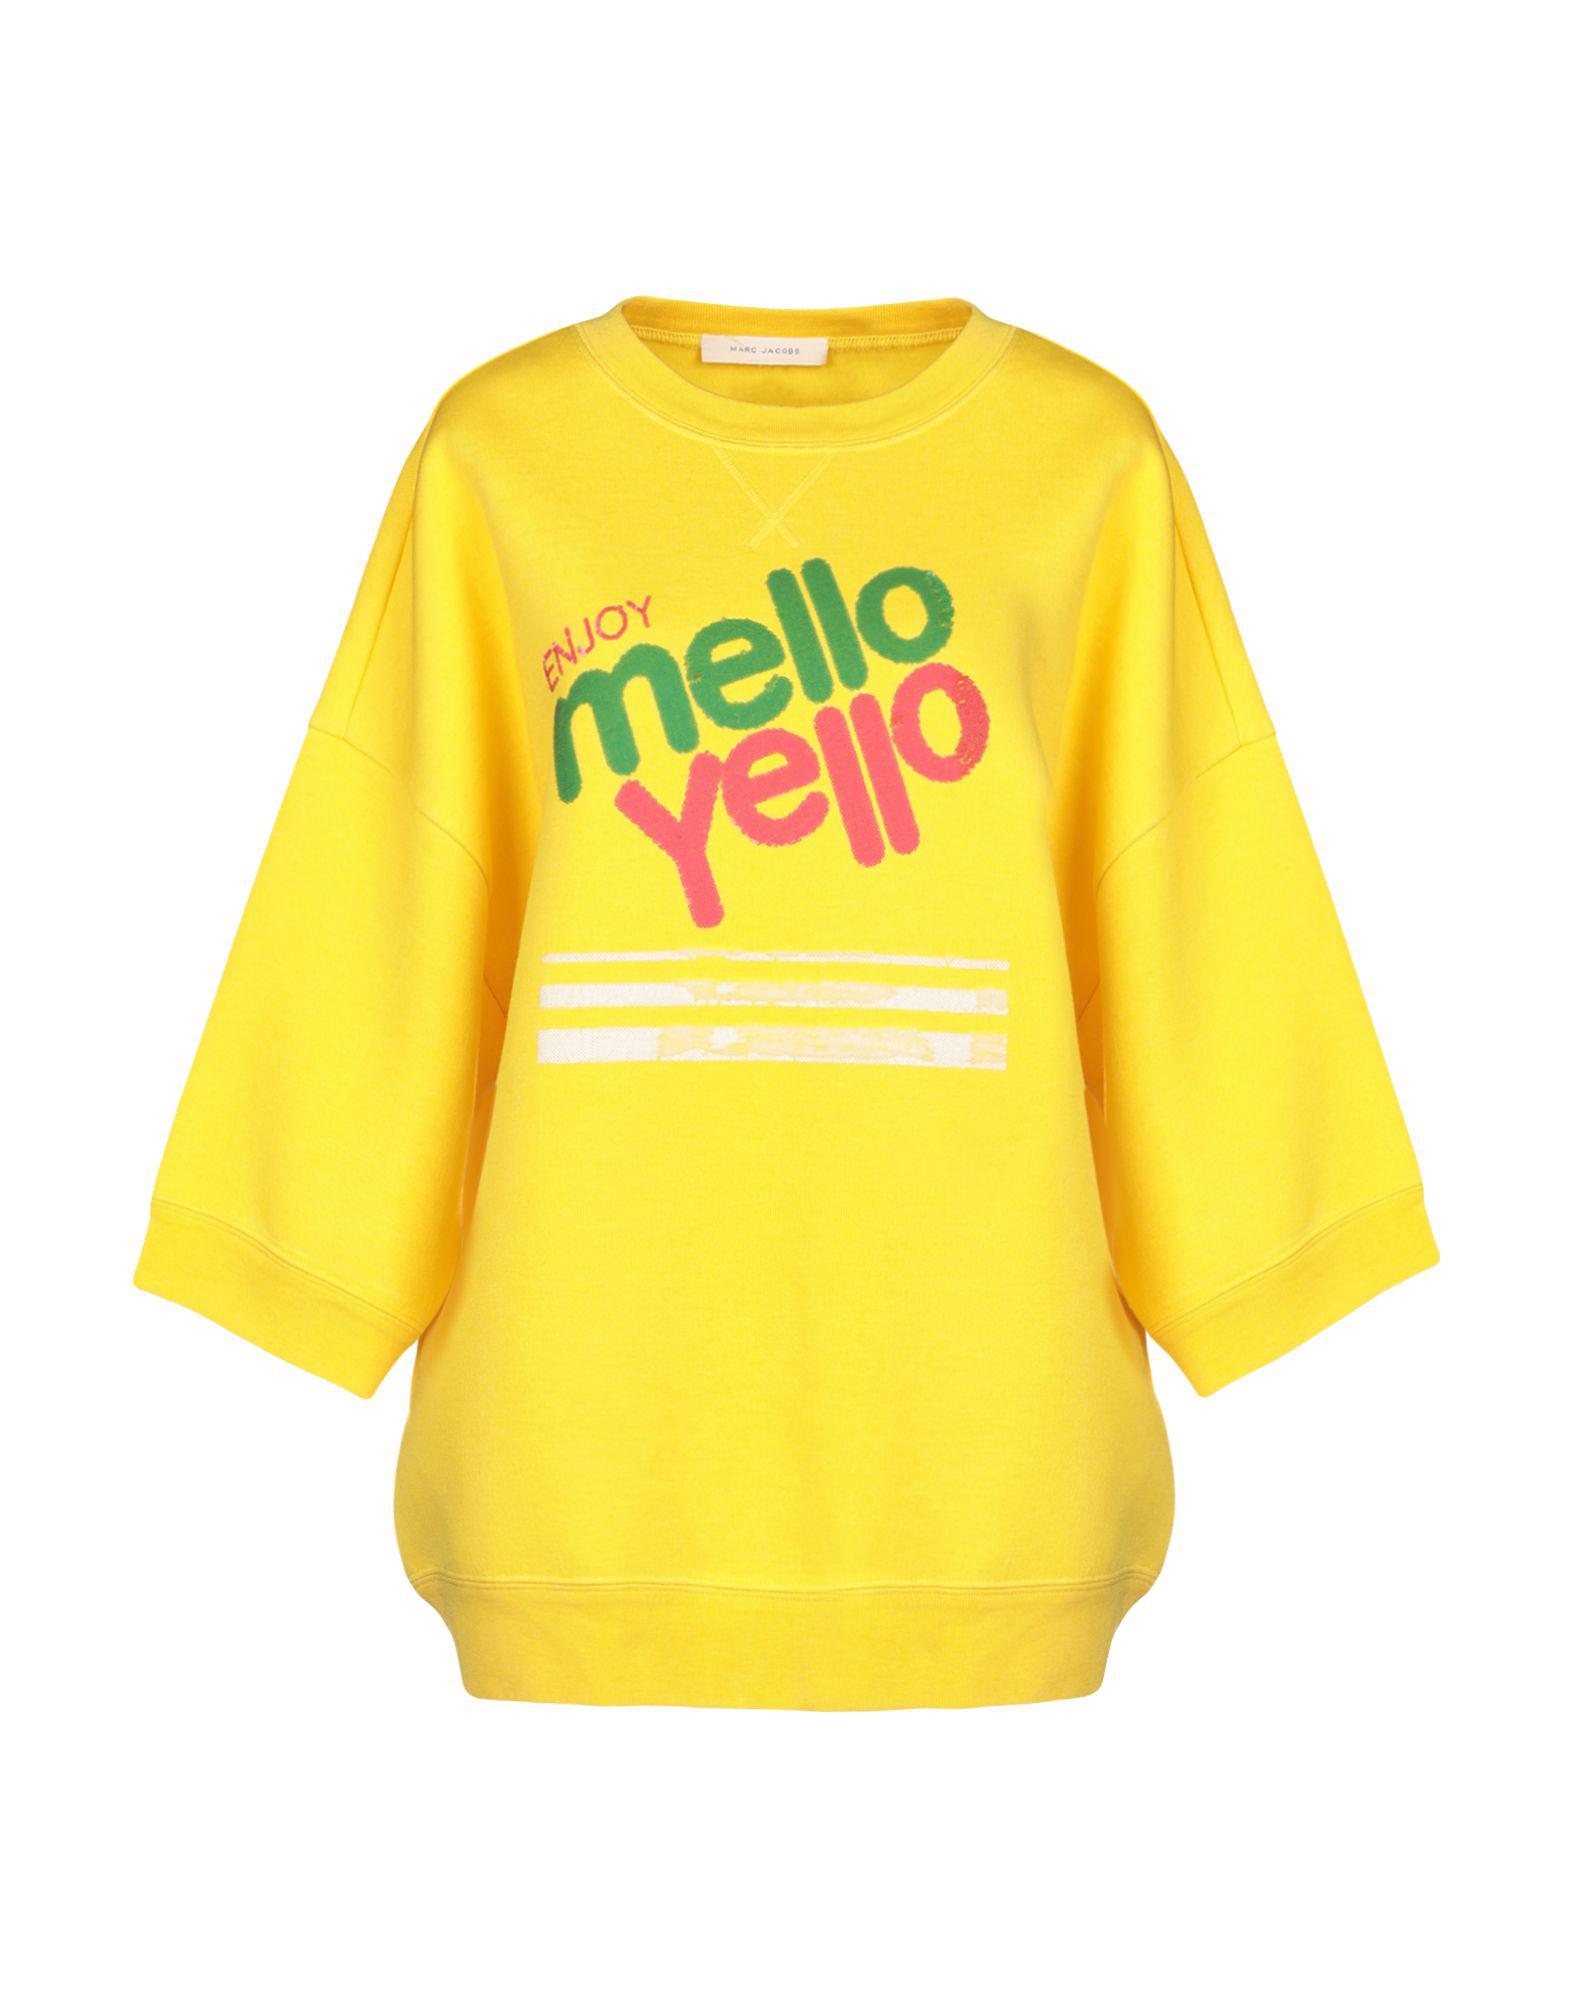 Marc Jacobs Mello Yello Short Sleeve Sweatshirt in Yellow | Lyst